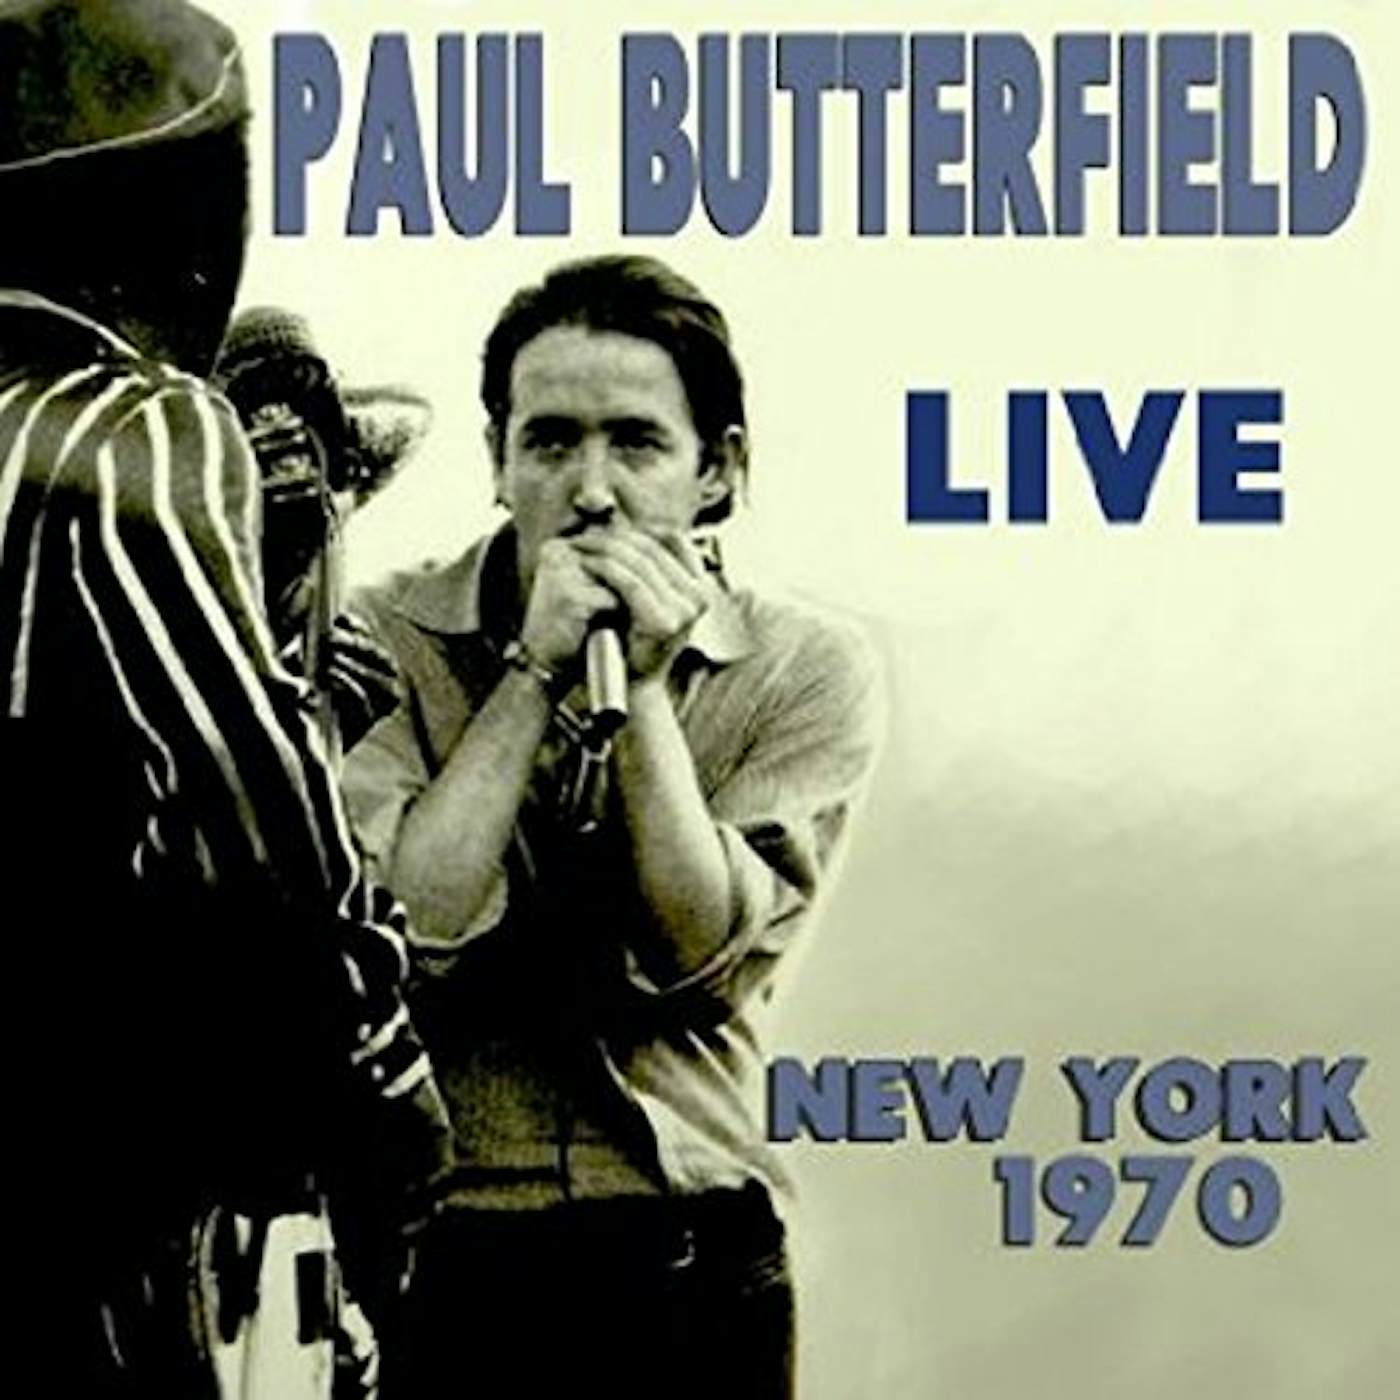 Paul Butterfield LIVE NEW YORK 1970 CD